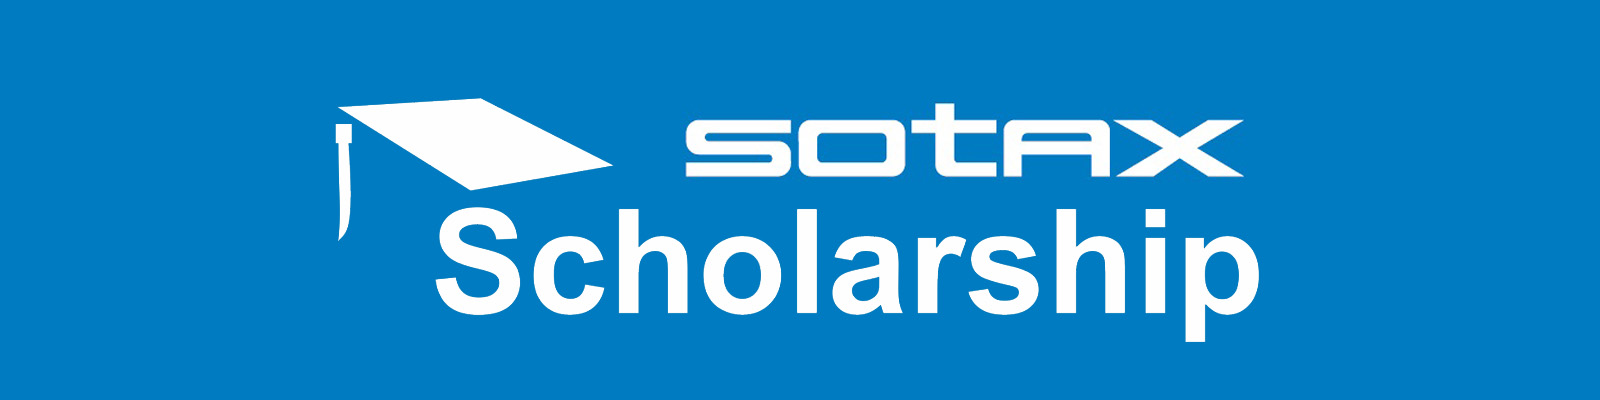 Sotax Scholarship